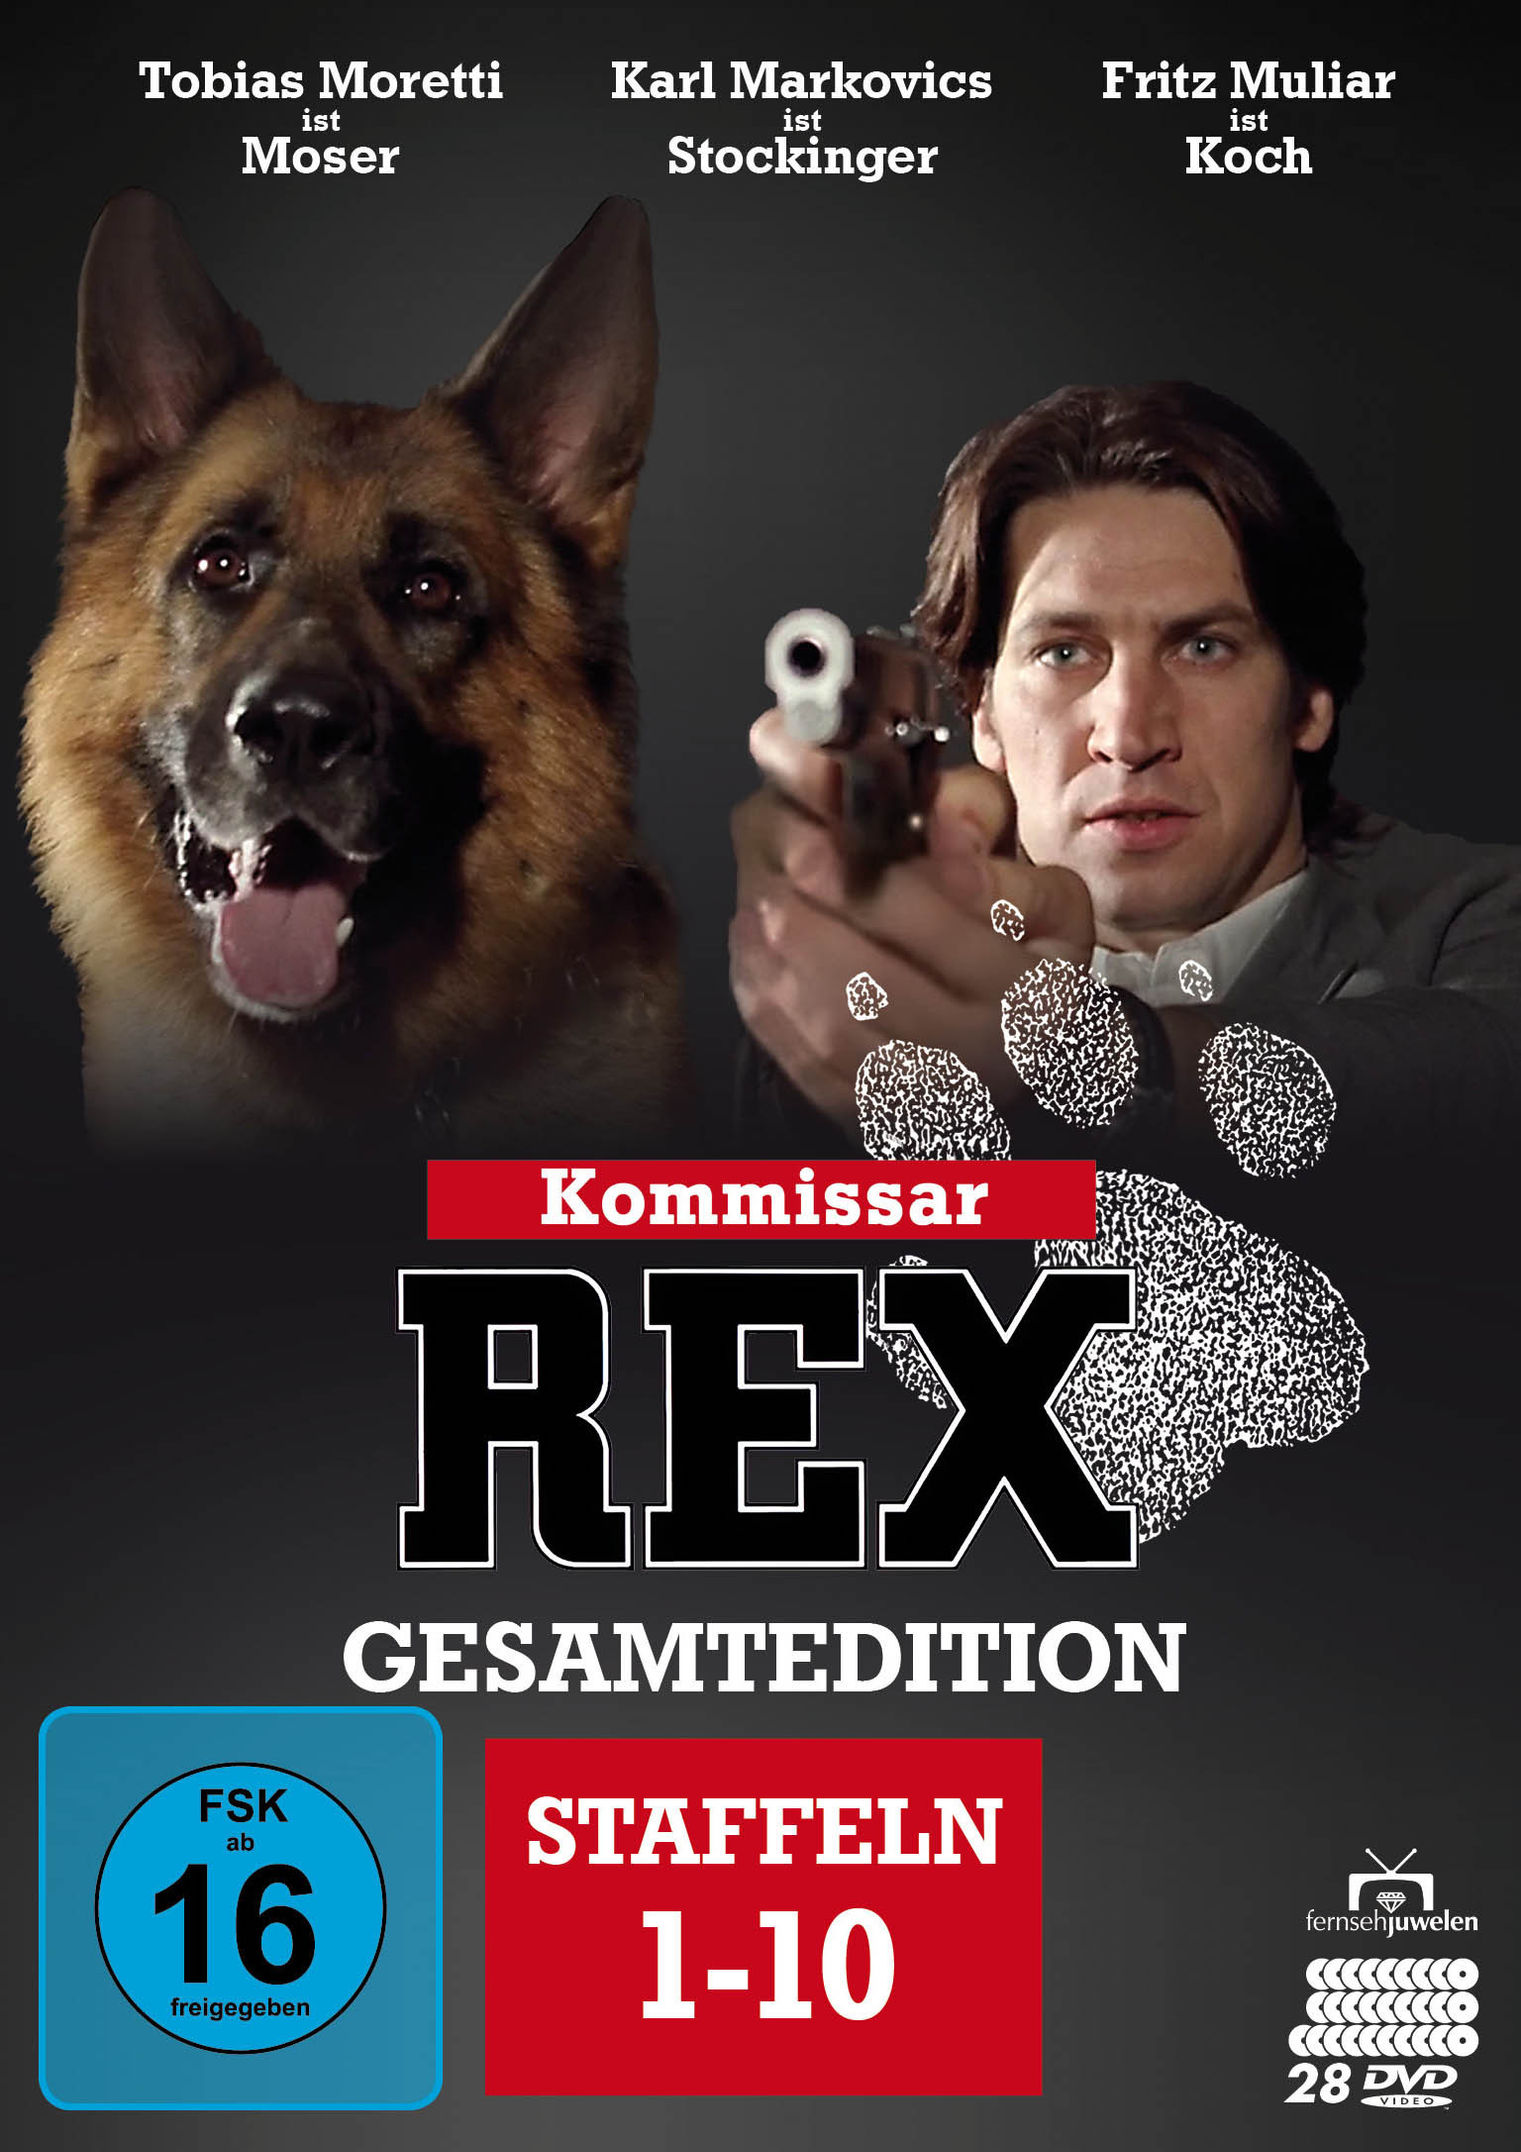 Kommissar Rex - Gesamtedition Staffeln 1 - 10 DVD | Weltbild.at